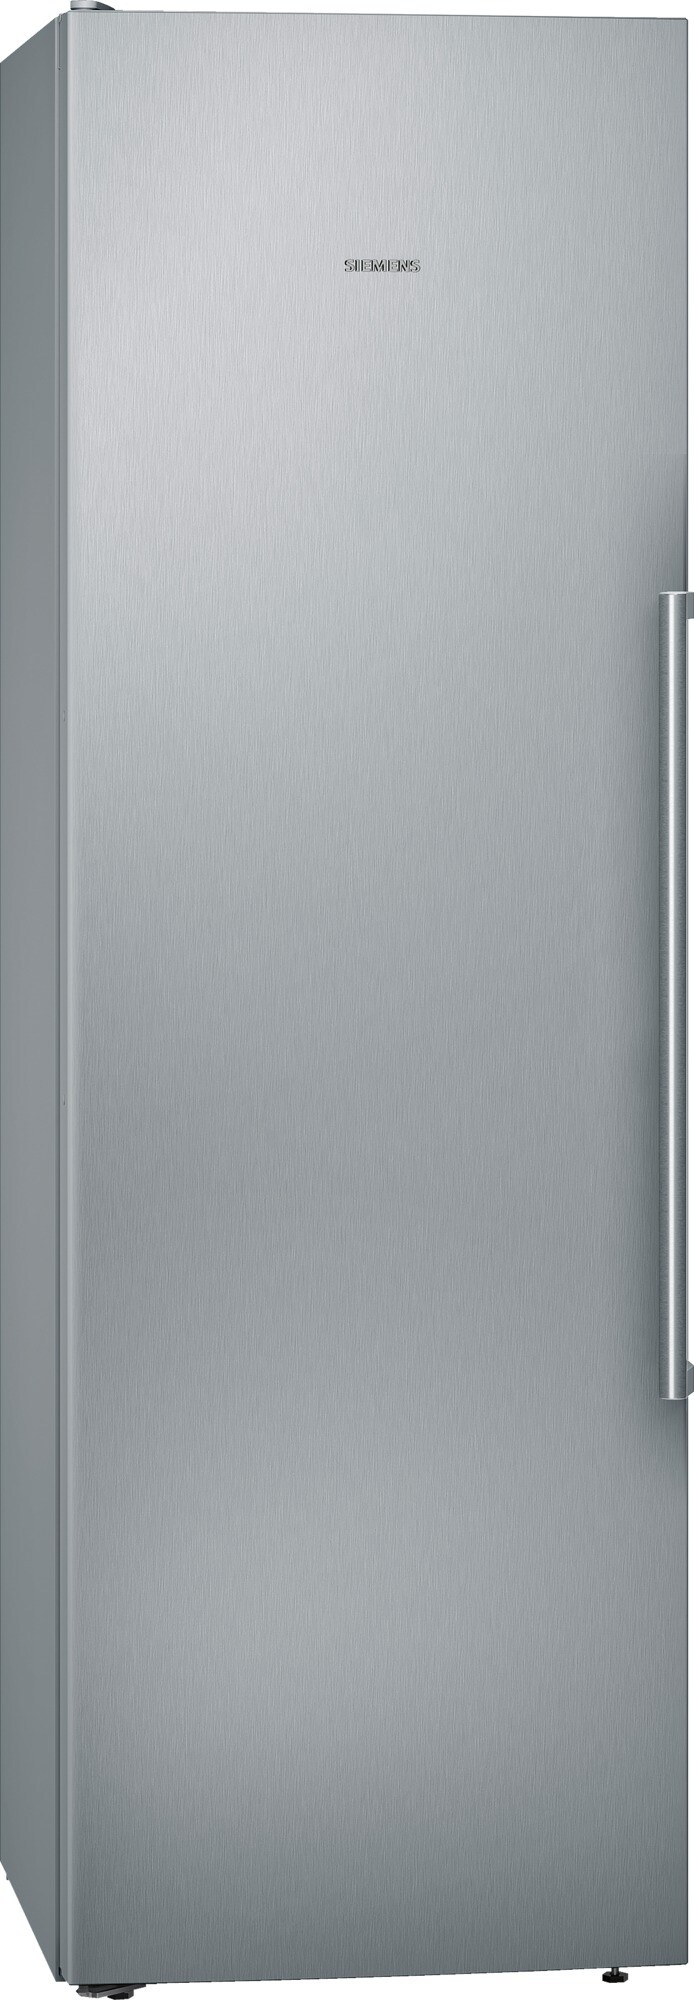 Siemens iQ500 kjøleskap KS36VAIDP (rustfritt stål) - Kjøleskap - Elkjøp